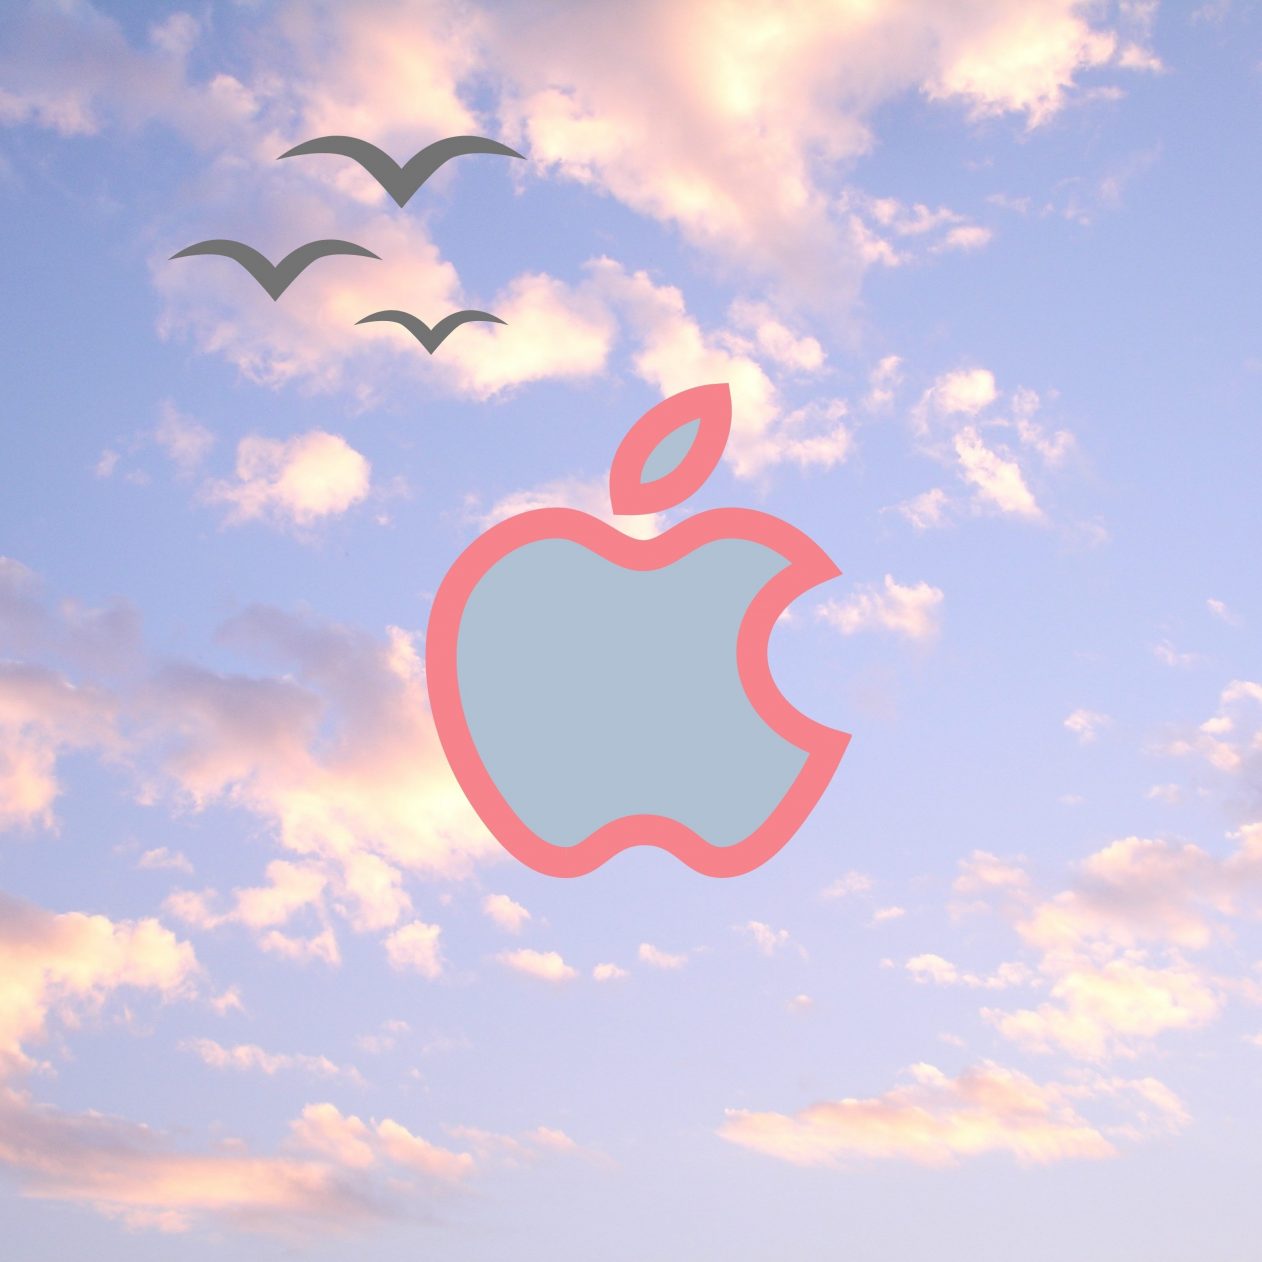 1262x1262 Parallax wallpaper 4k Apple Logo Pink Blue Sky Clouds Birds iPad Wallpaper 1262x1262 pixels resolution